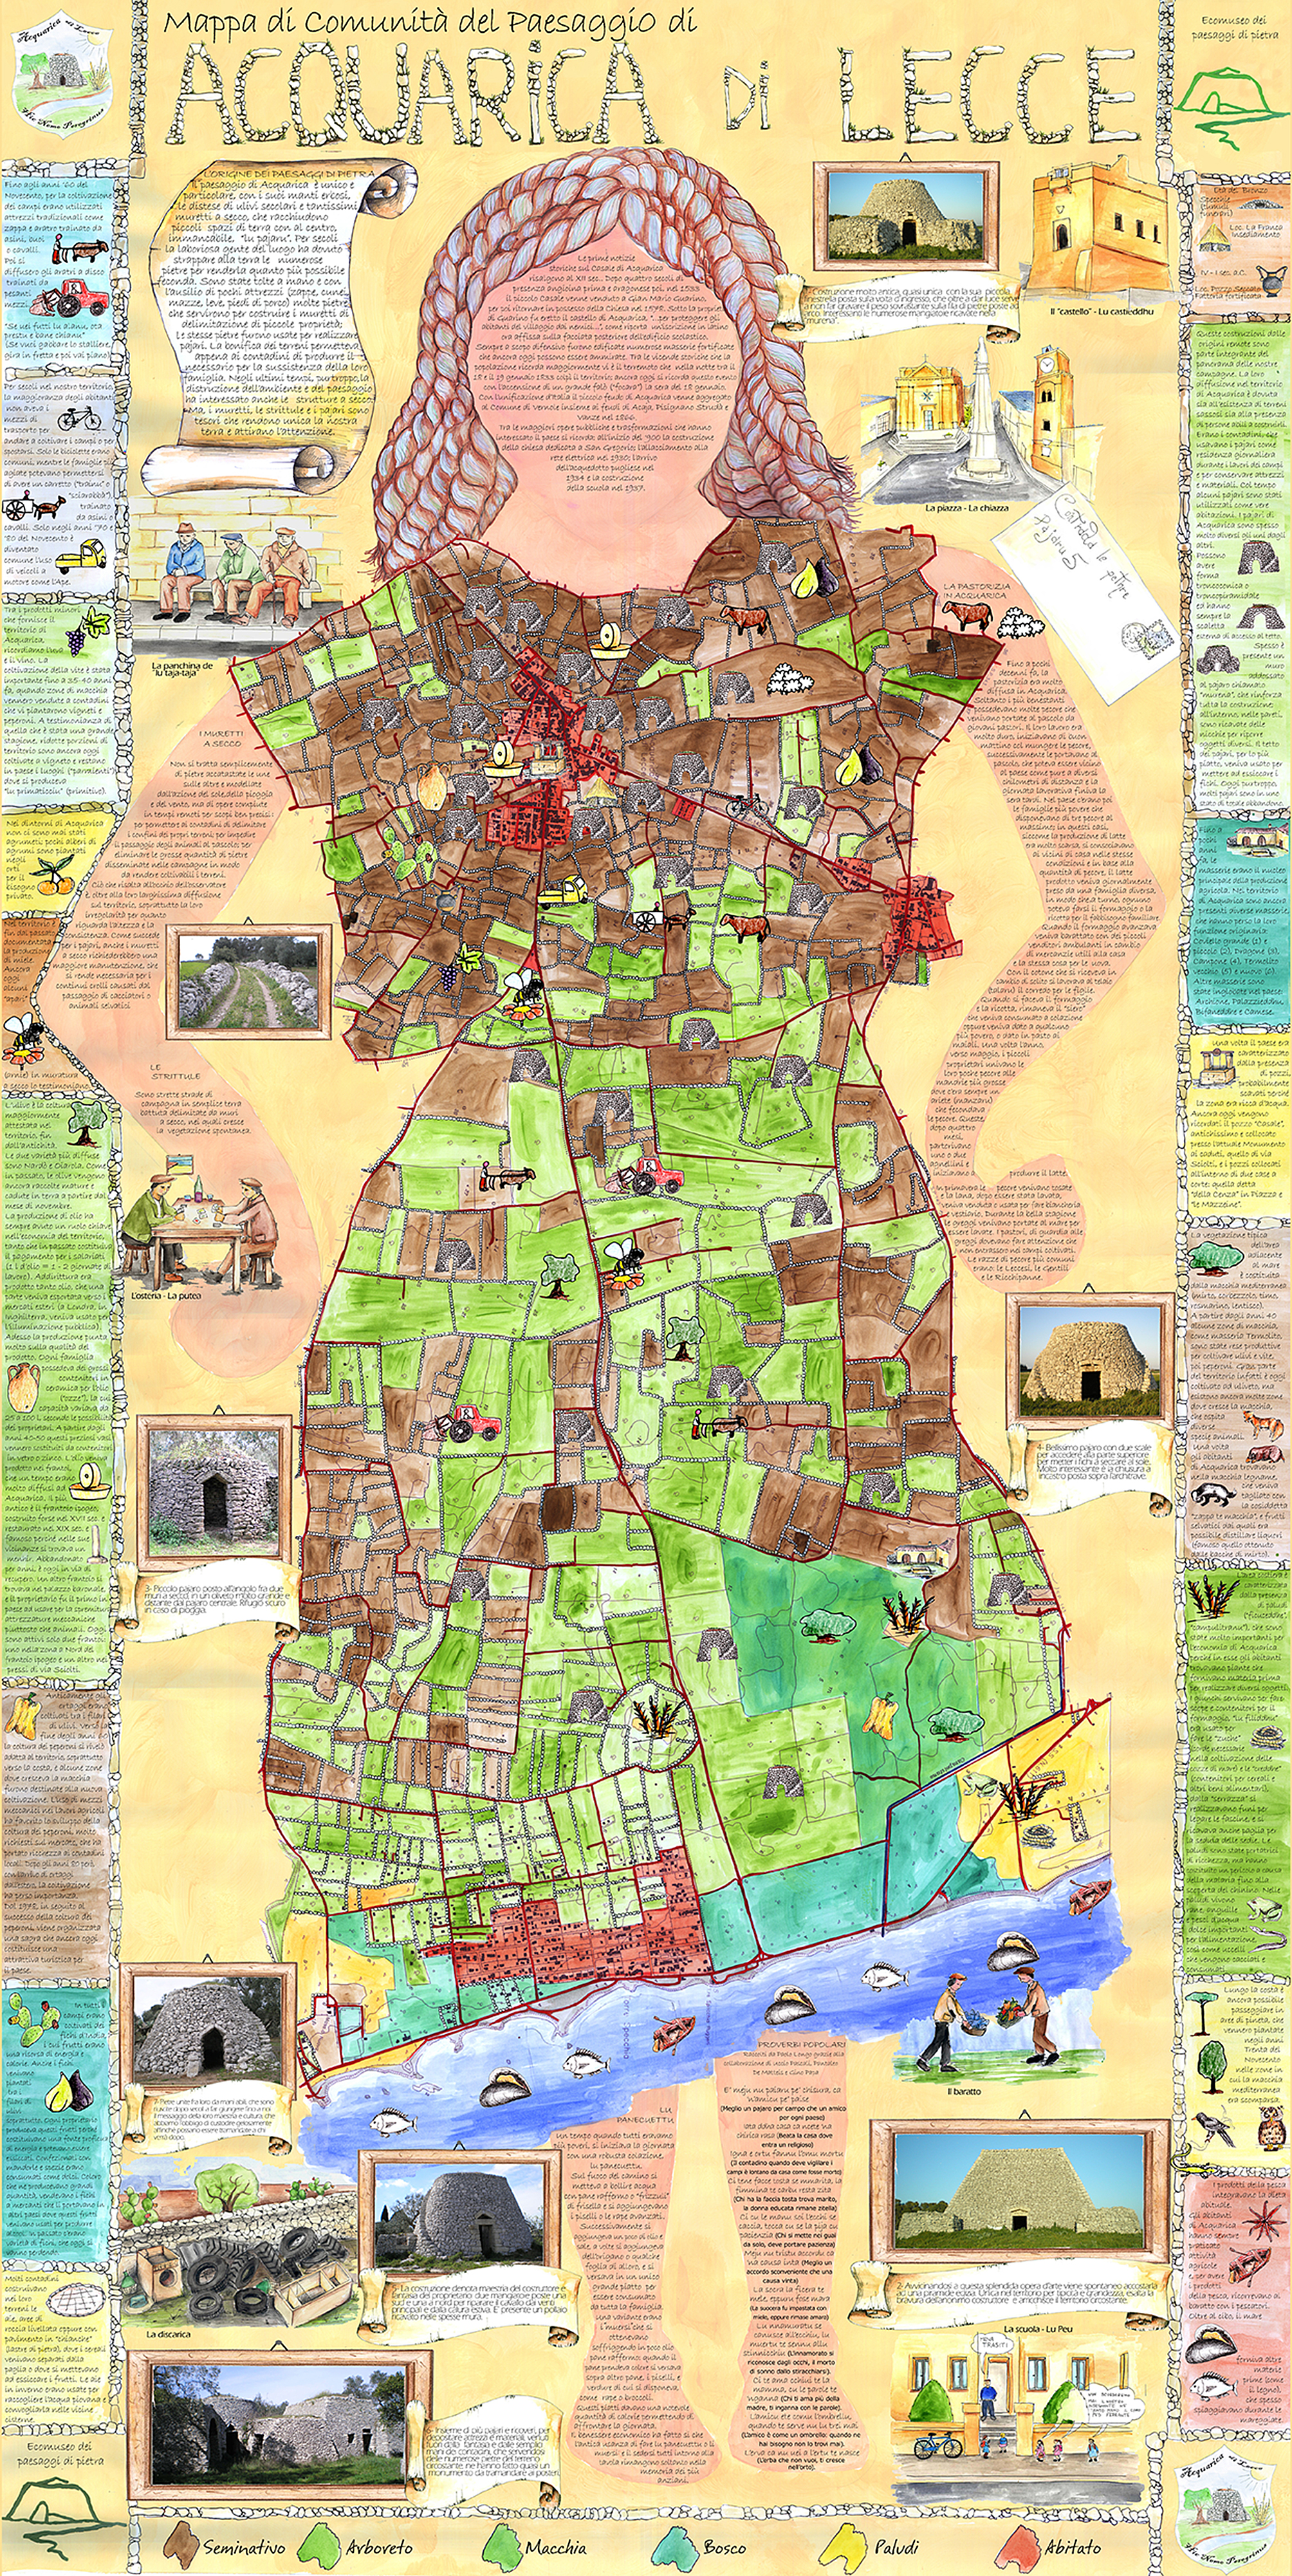 Acquarica di Lecce community map; source: Ecomuseums System of Apulia, 2010.